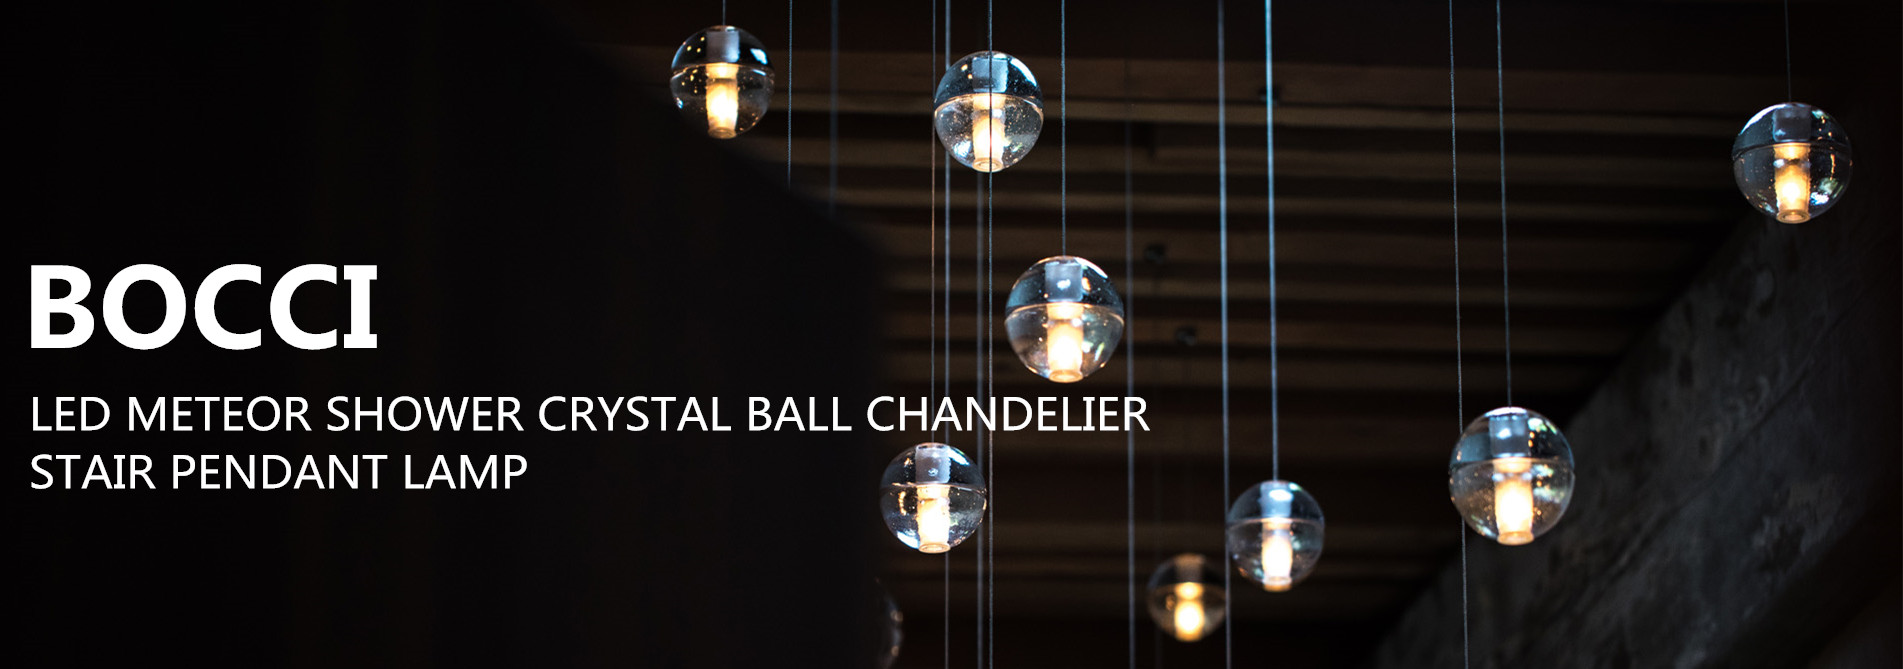 BOCCI LED METEOR SHOWER CRYSTAL BALL CHANDELIER 